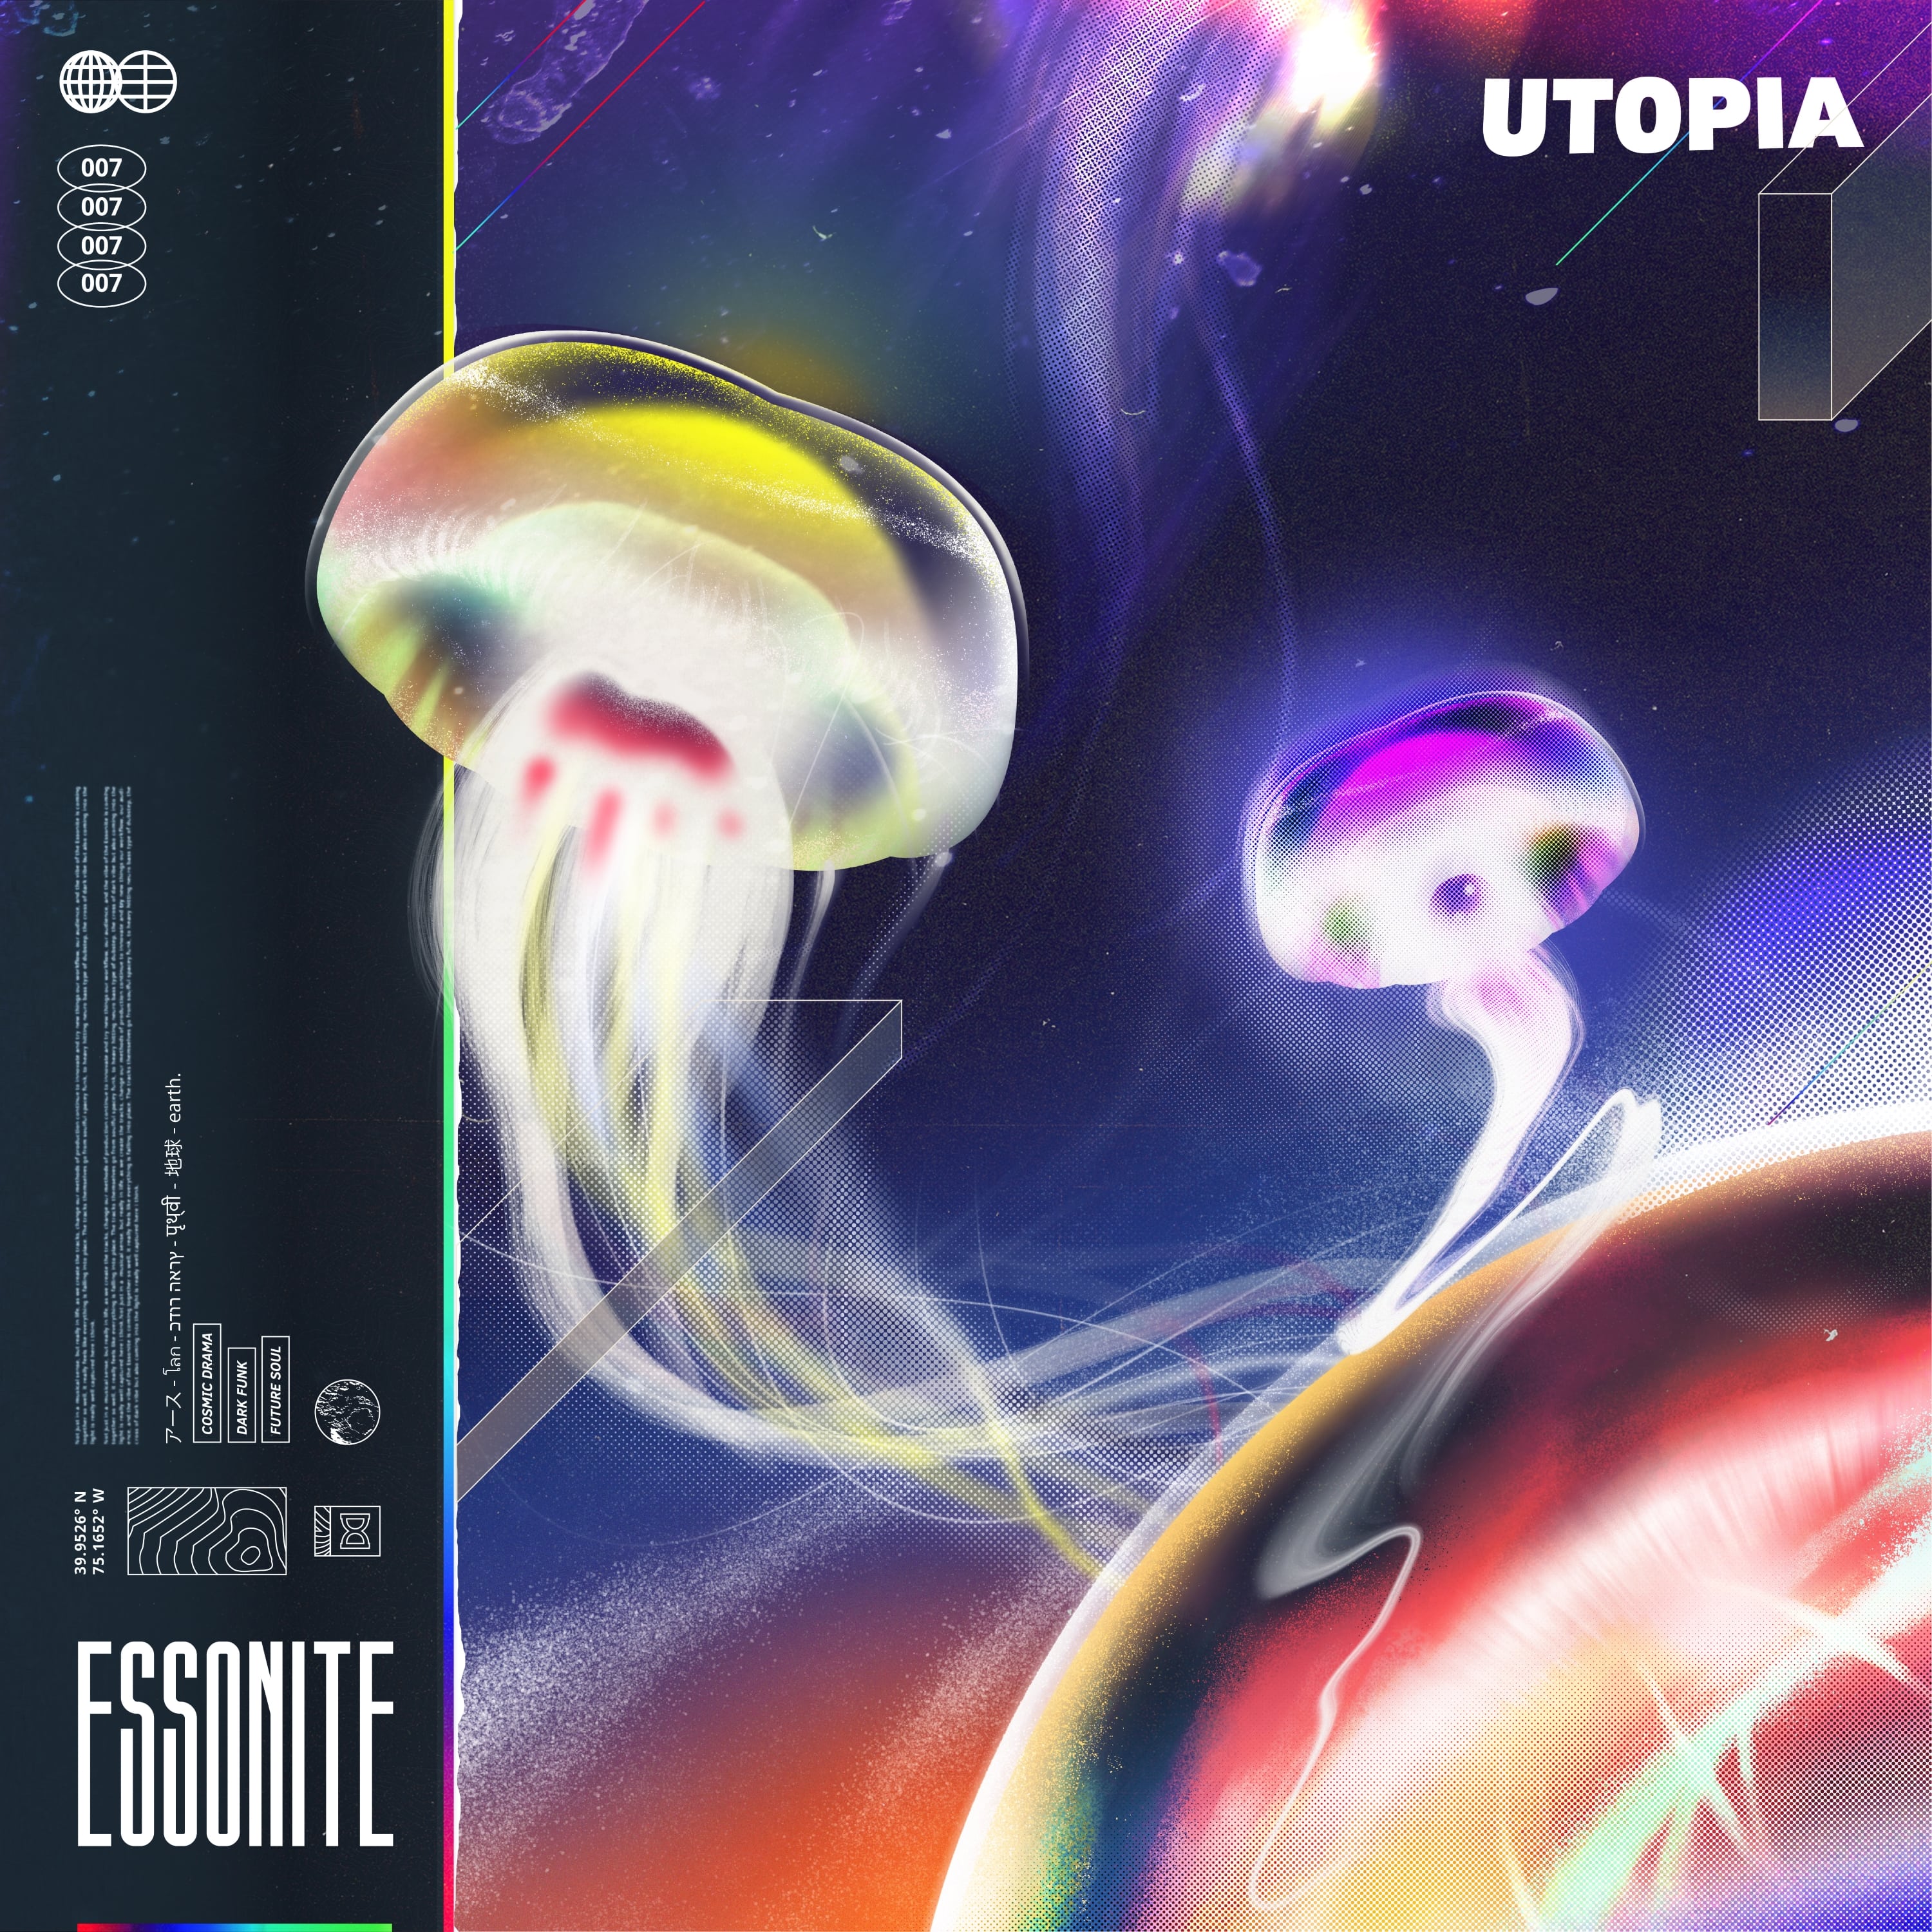 Utopia Essonite